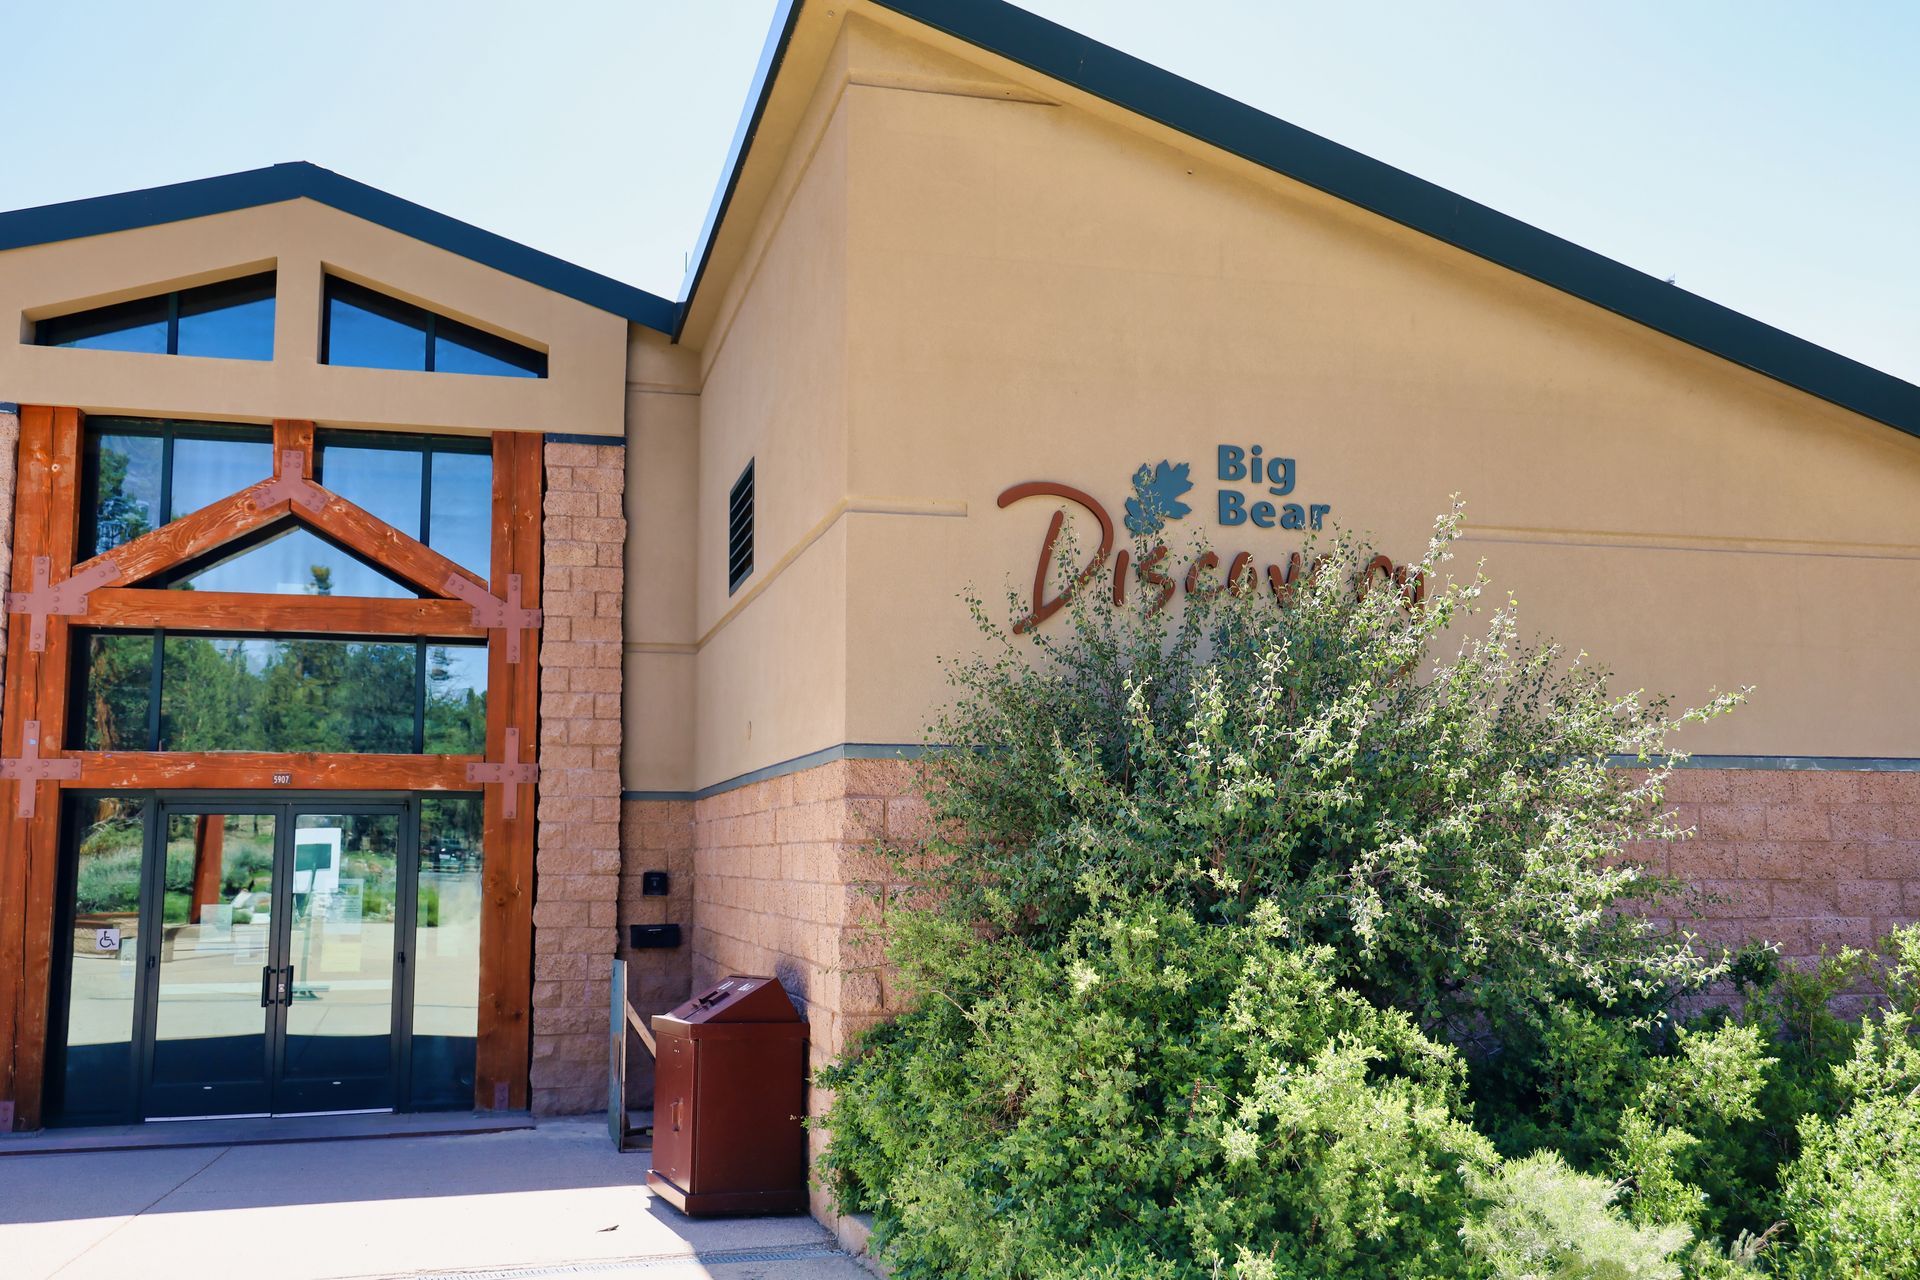 Big Bear Discovery Center: Big Bear Lake's Visitor Center